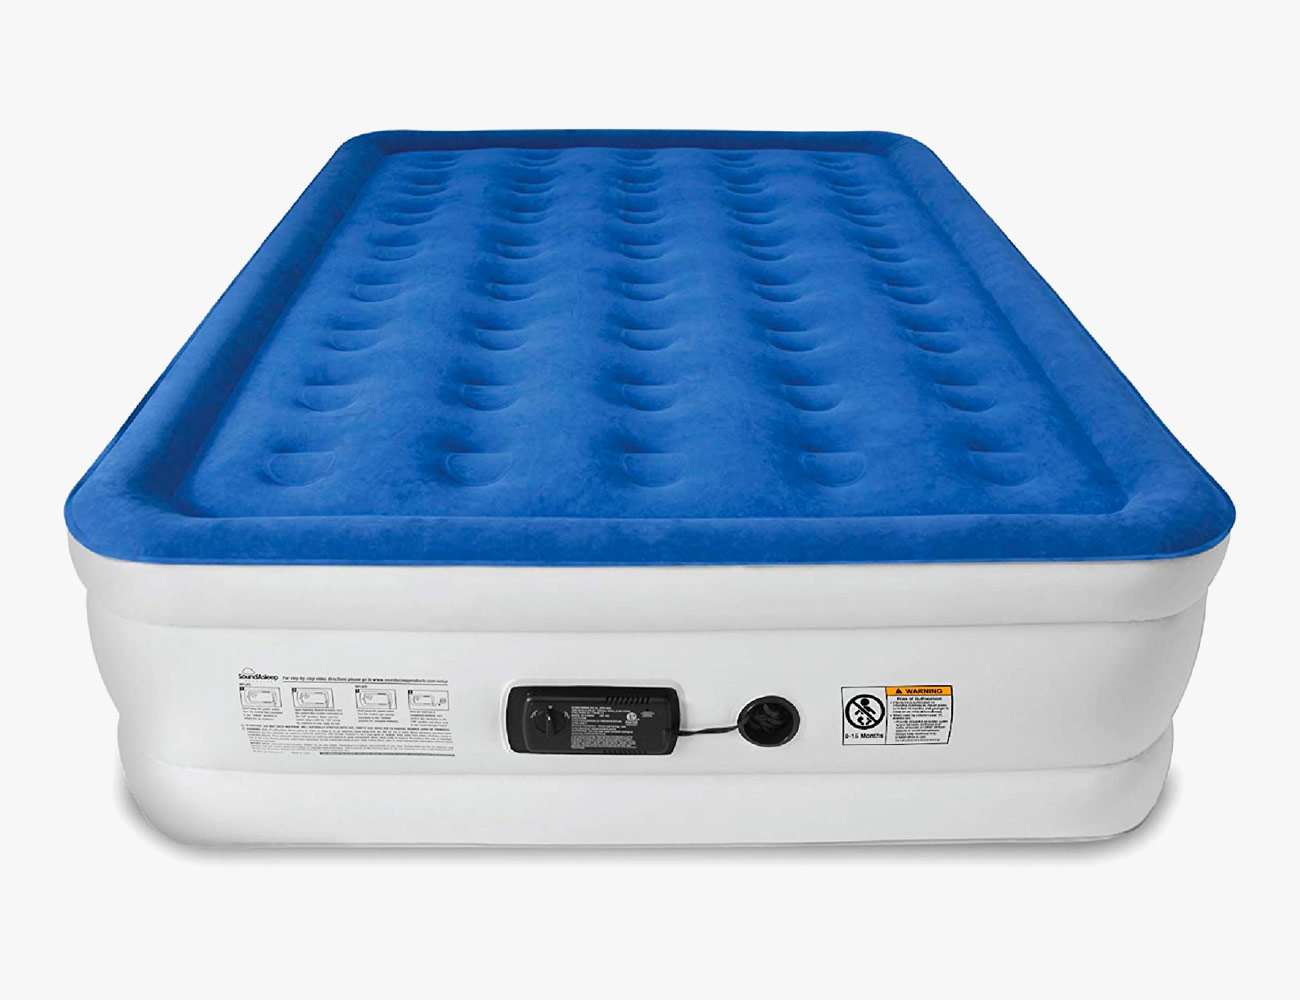 buy soundasleep air mattress uk